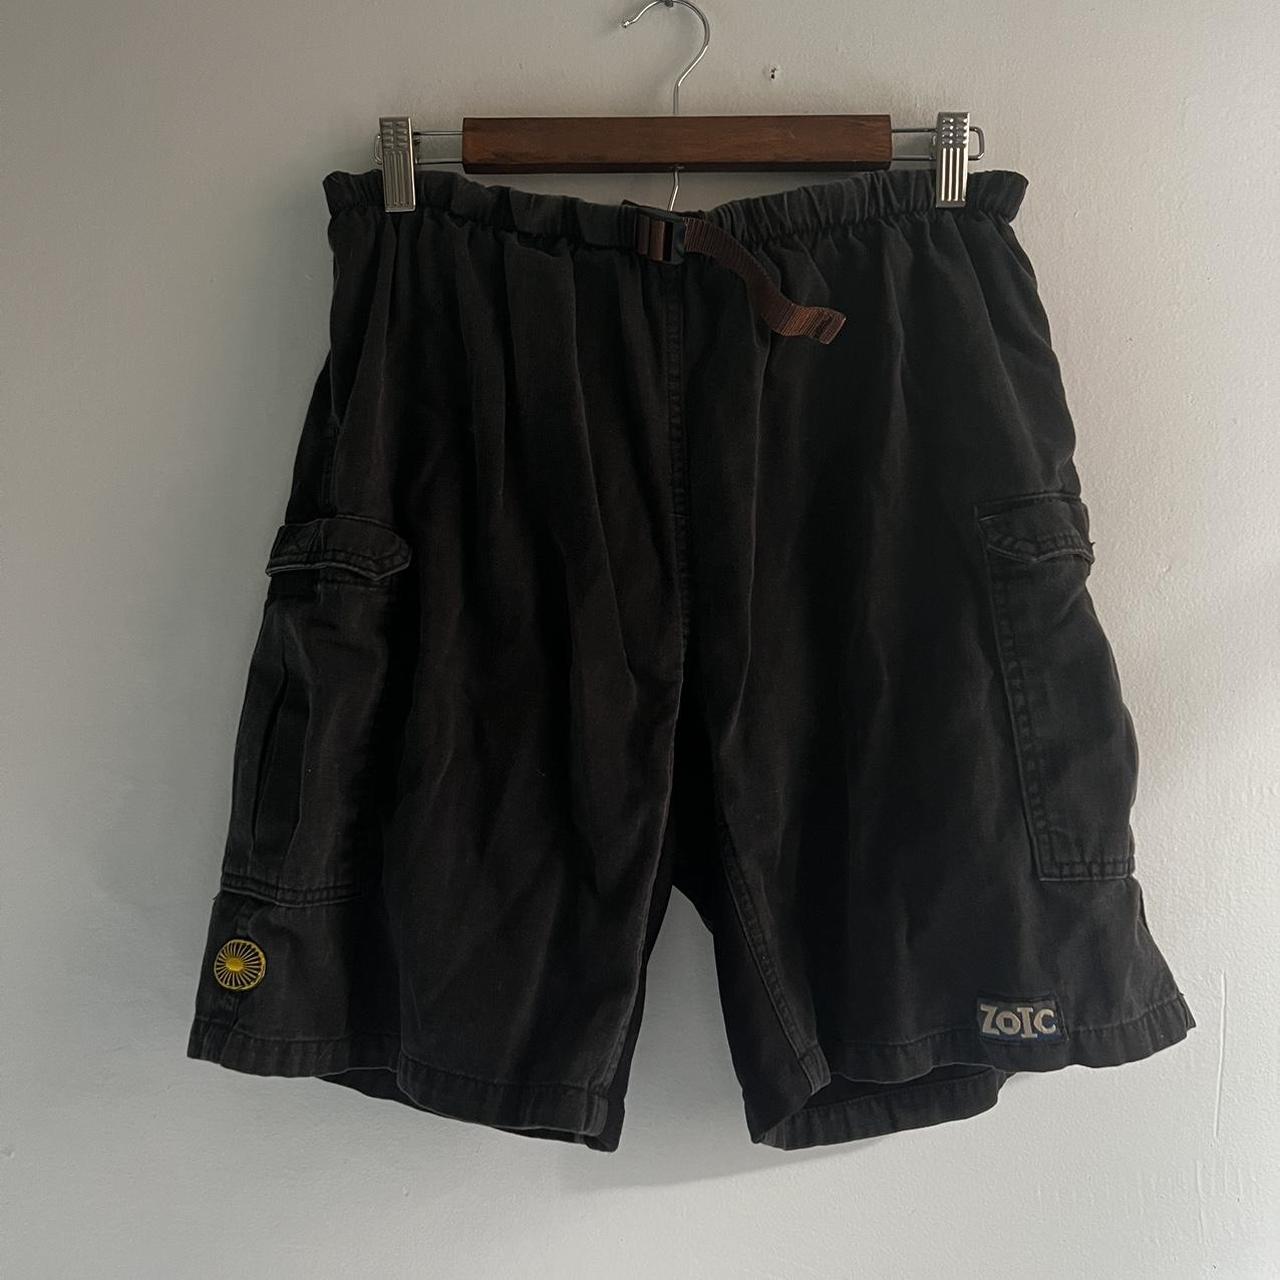 Stax Nandex mini bike shorts in sage Size XS - Depop